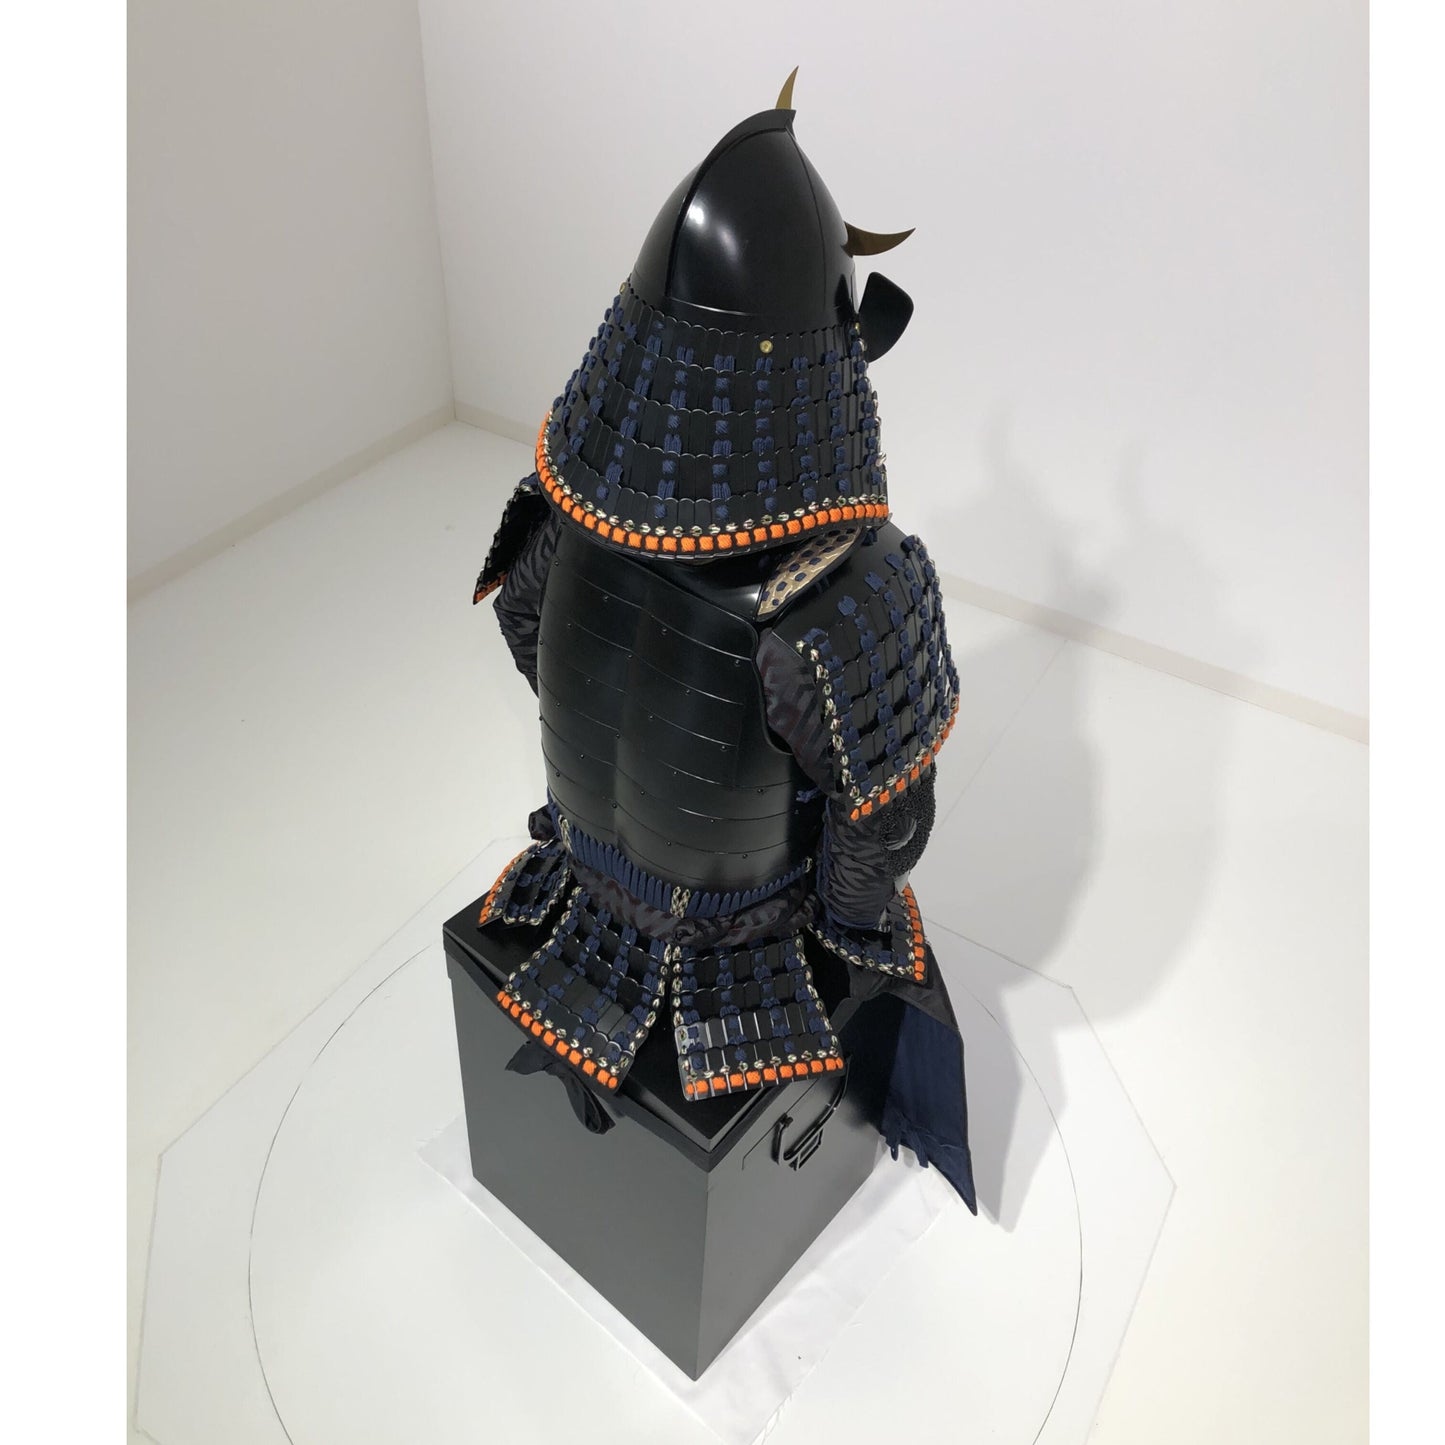 【O-051】Navy Blue Thread Odoshi / Black Matted Rivet Armor / Peach Shaped Helmet